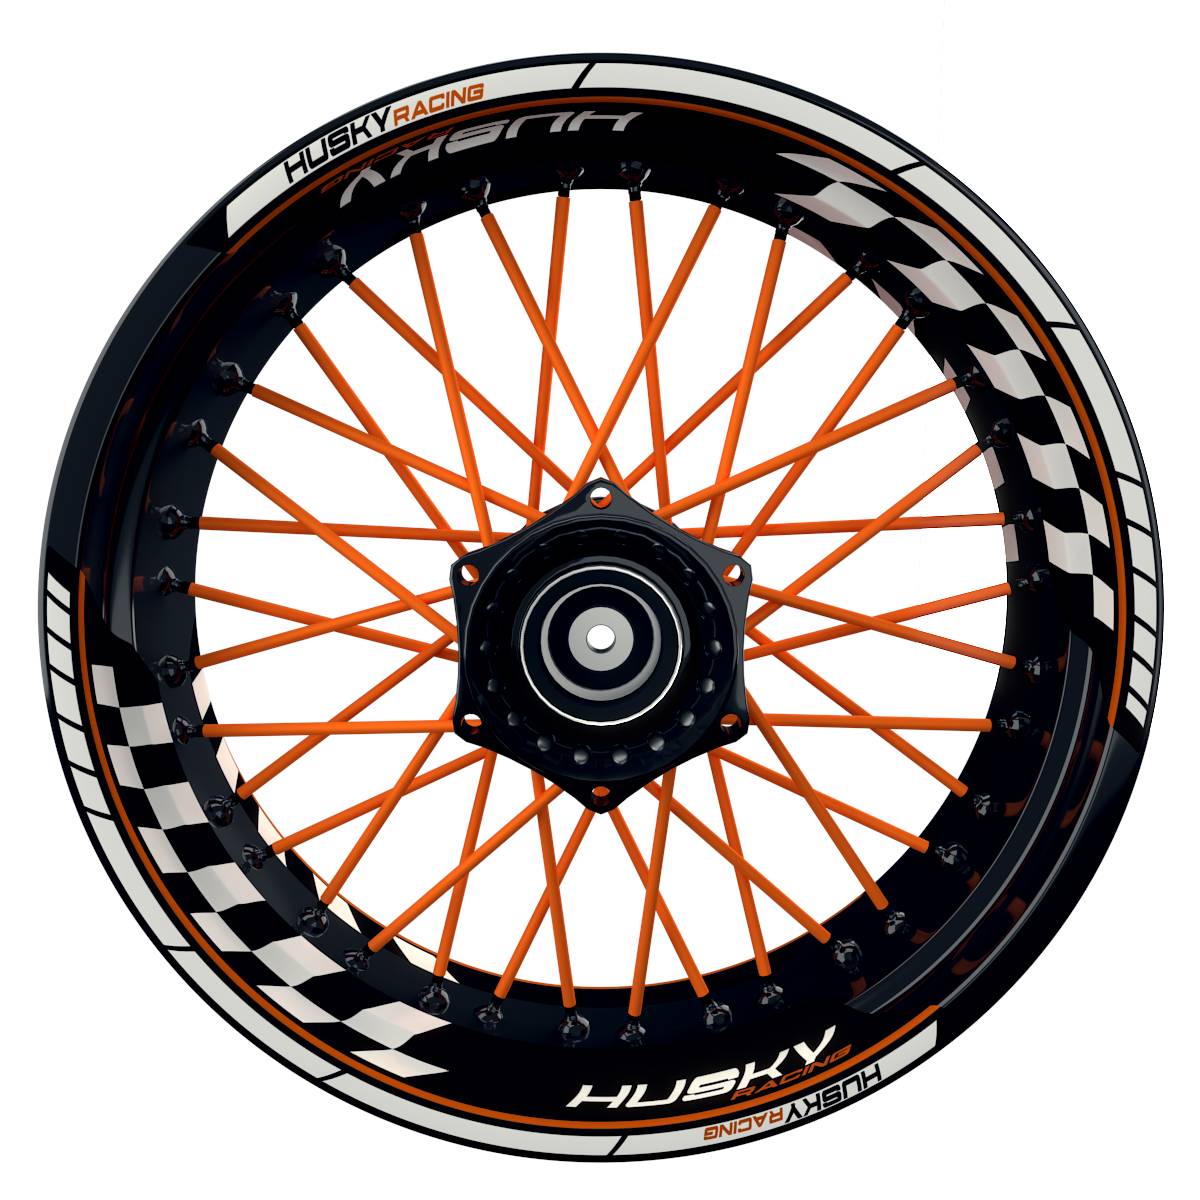 HUSKY Racing Grid schwarz orange Frontansicht